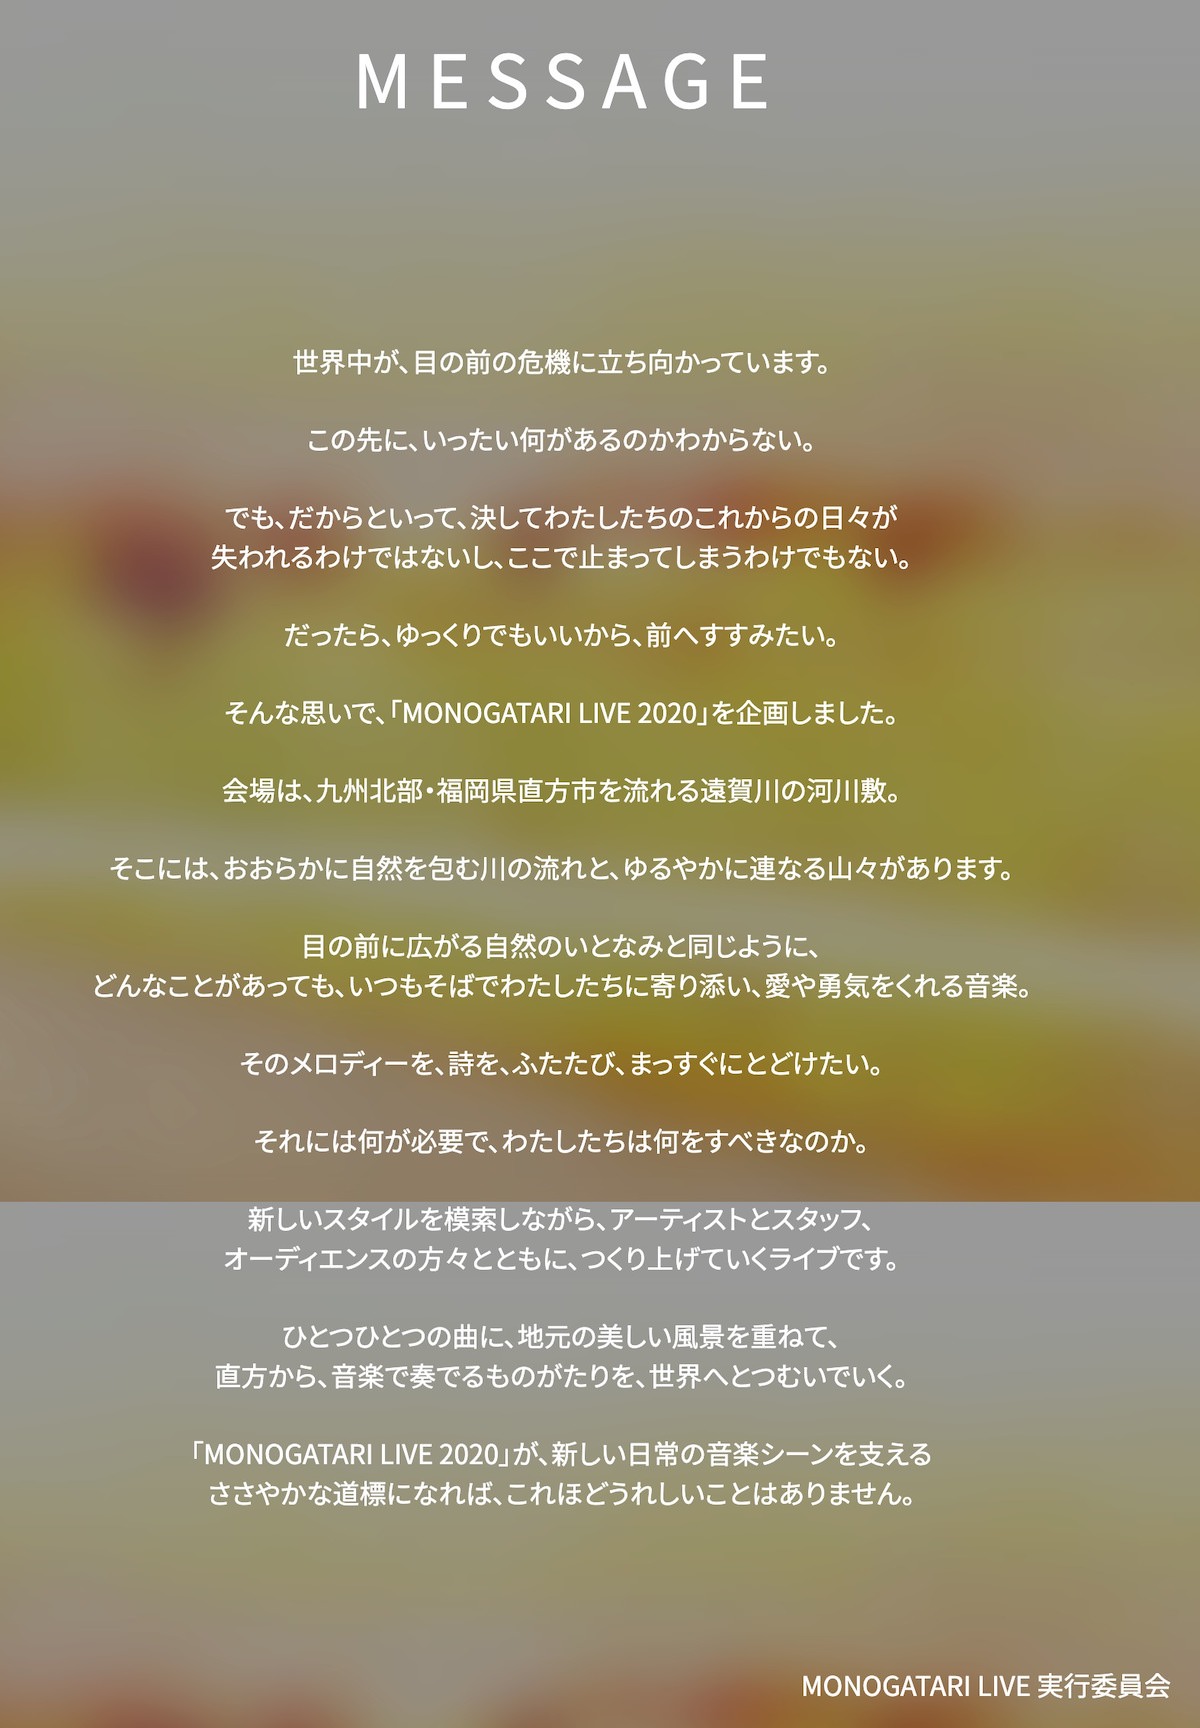 「MONOGATARI LIVE 2020」からのメッセージ